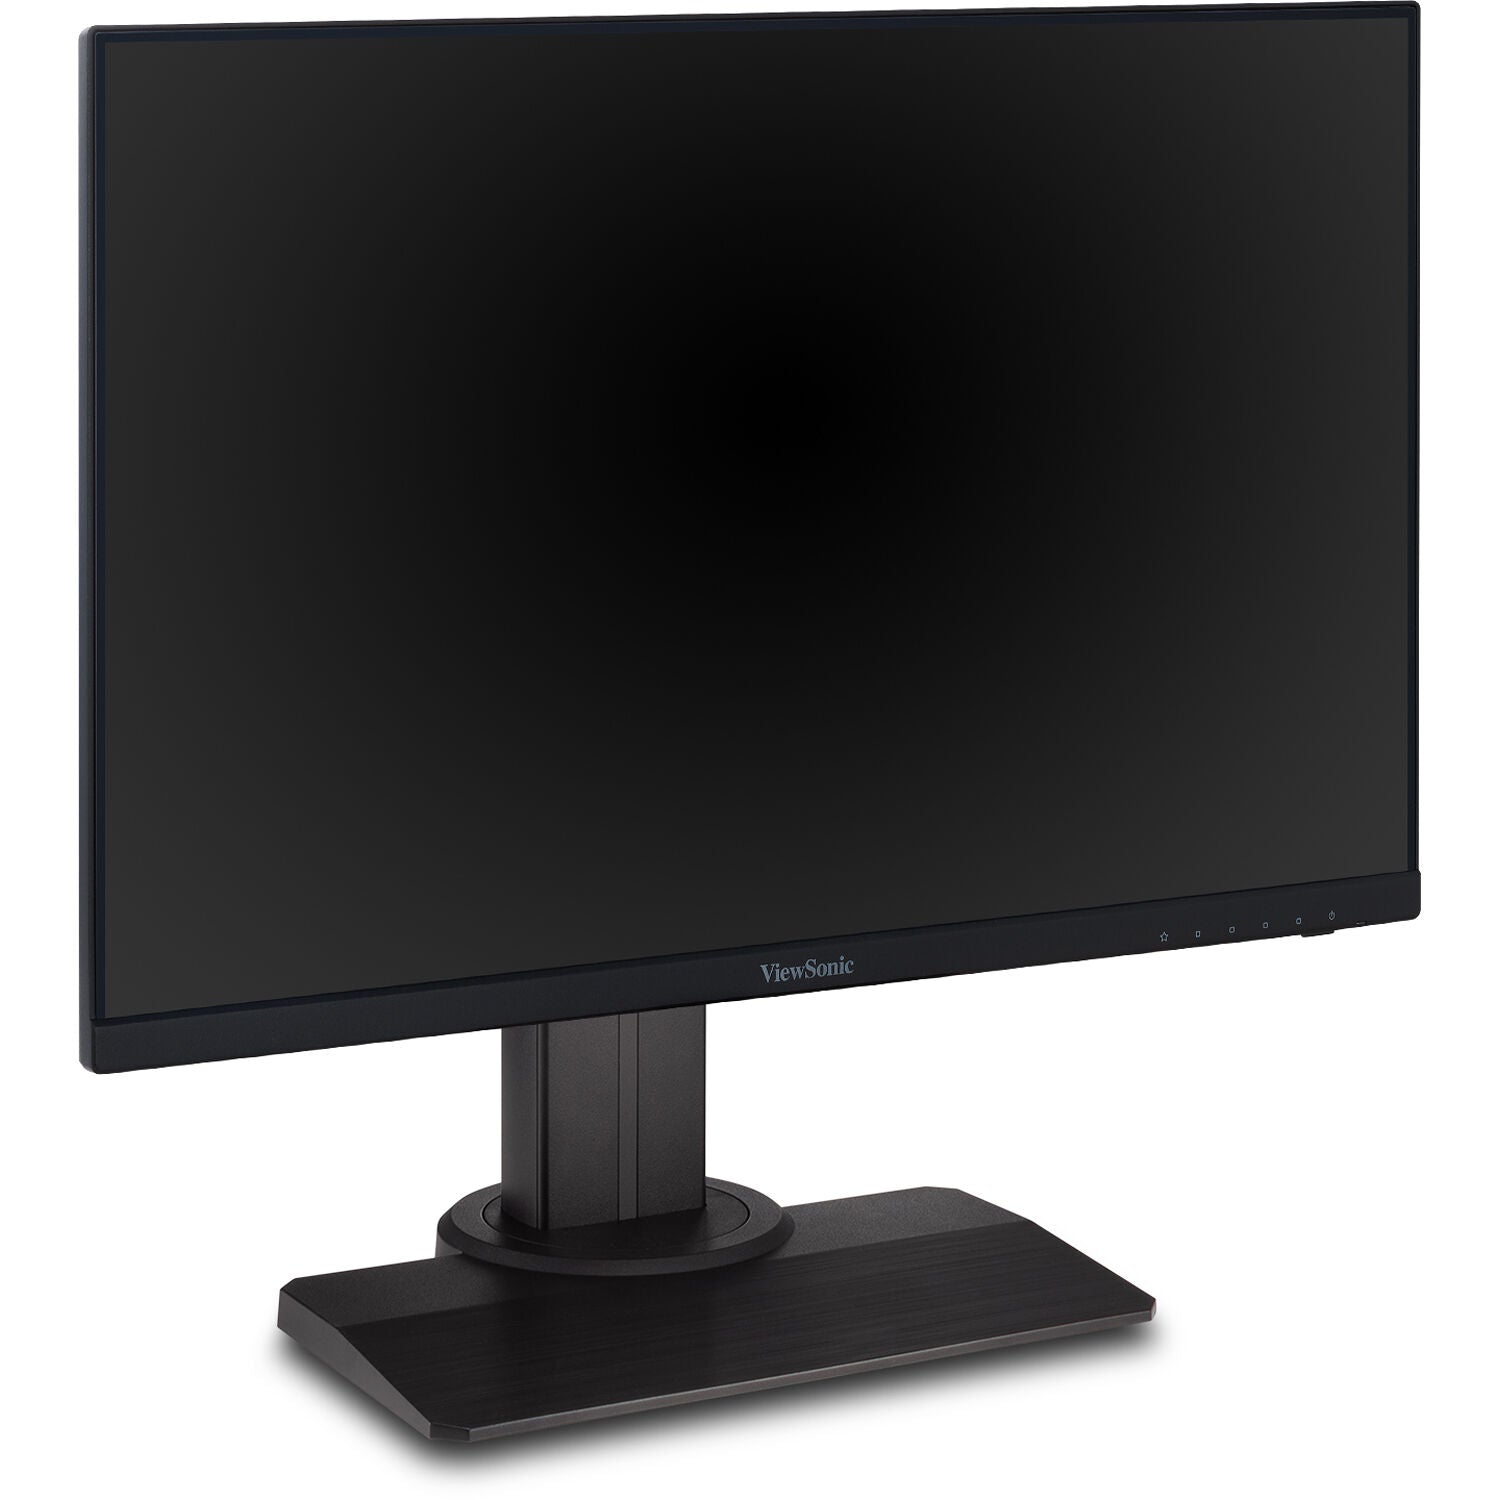 ViewSonic XG2431-R 24" Display, IPS Panel Monitor - Certified Refurbished